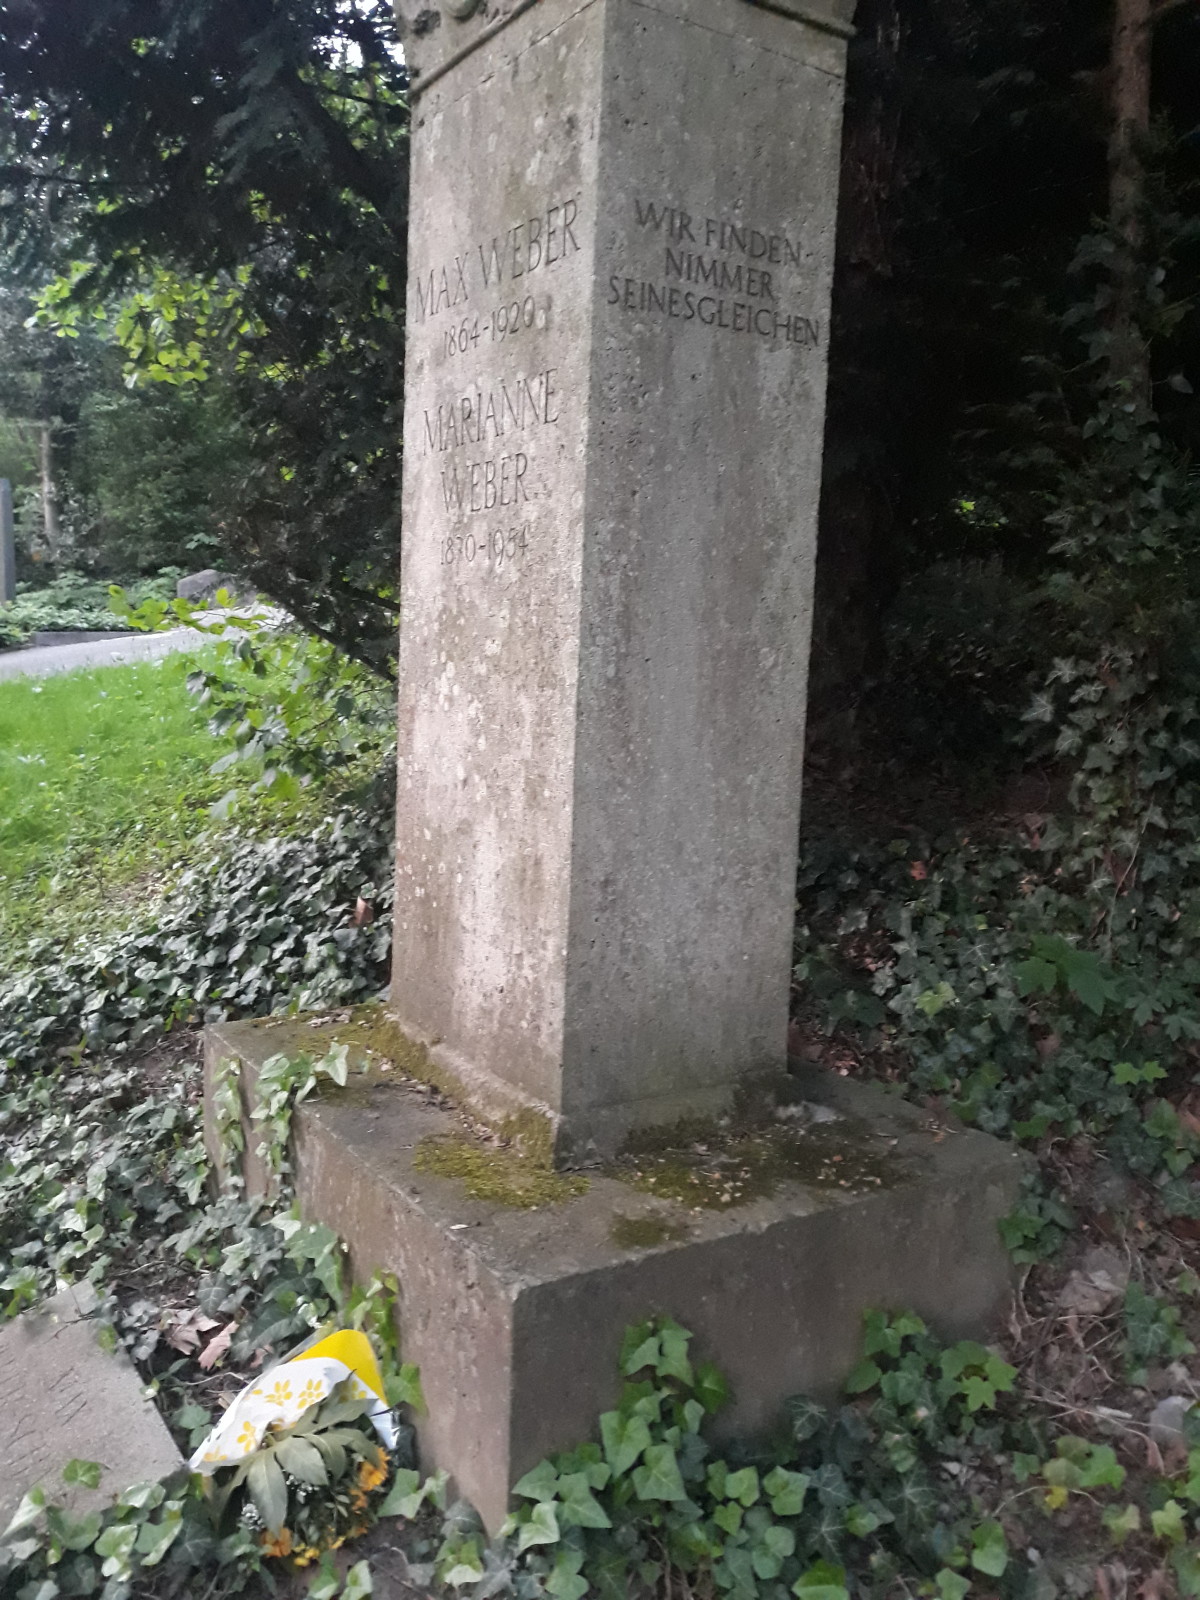 On Visiting Max Weber’s Gravestone